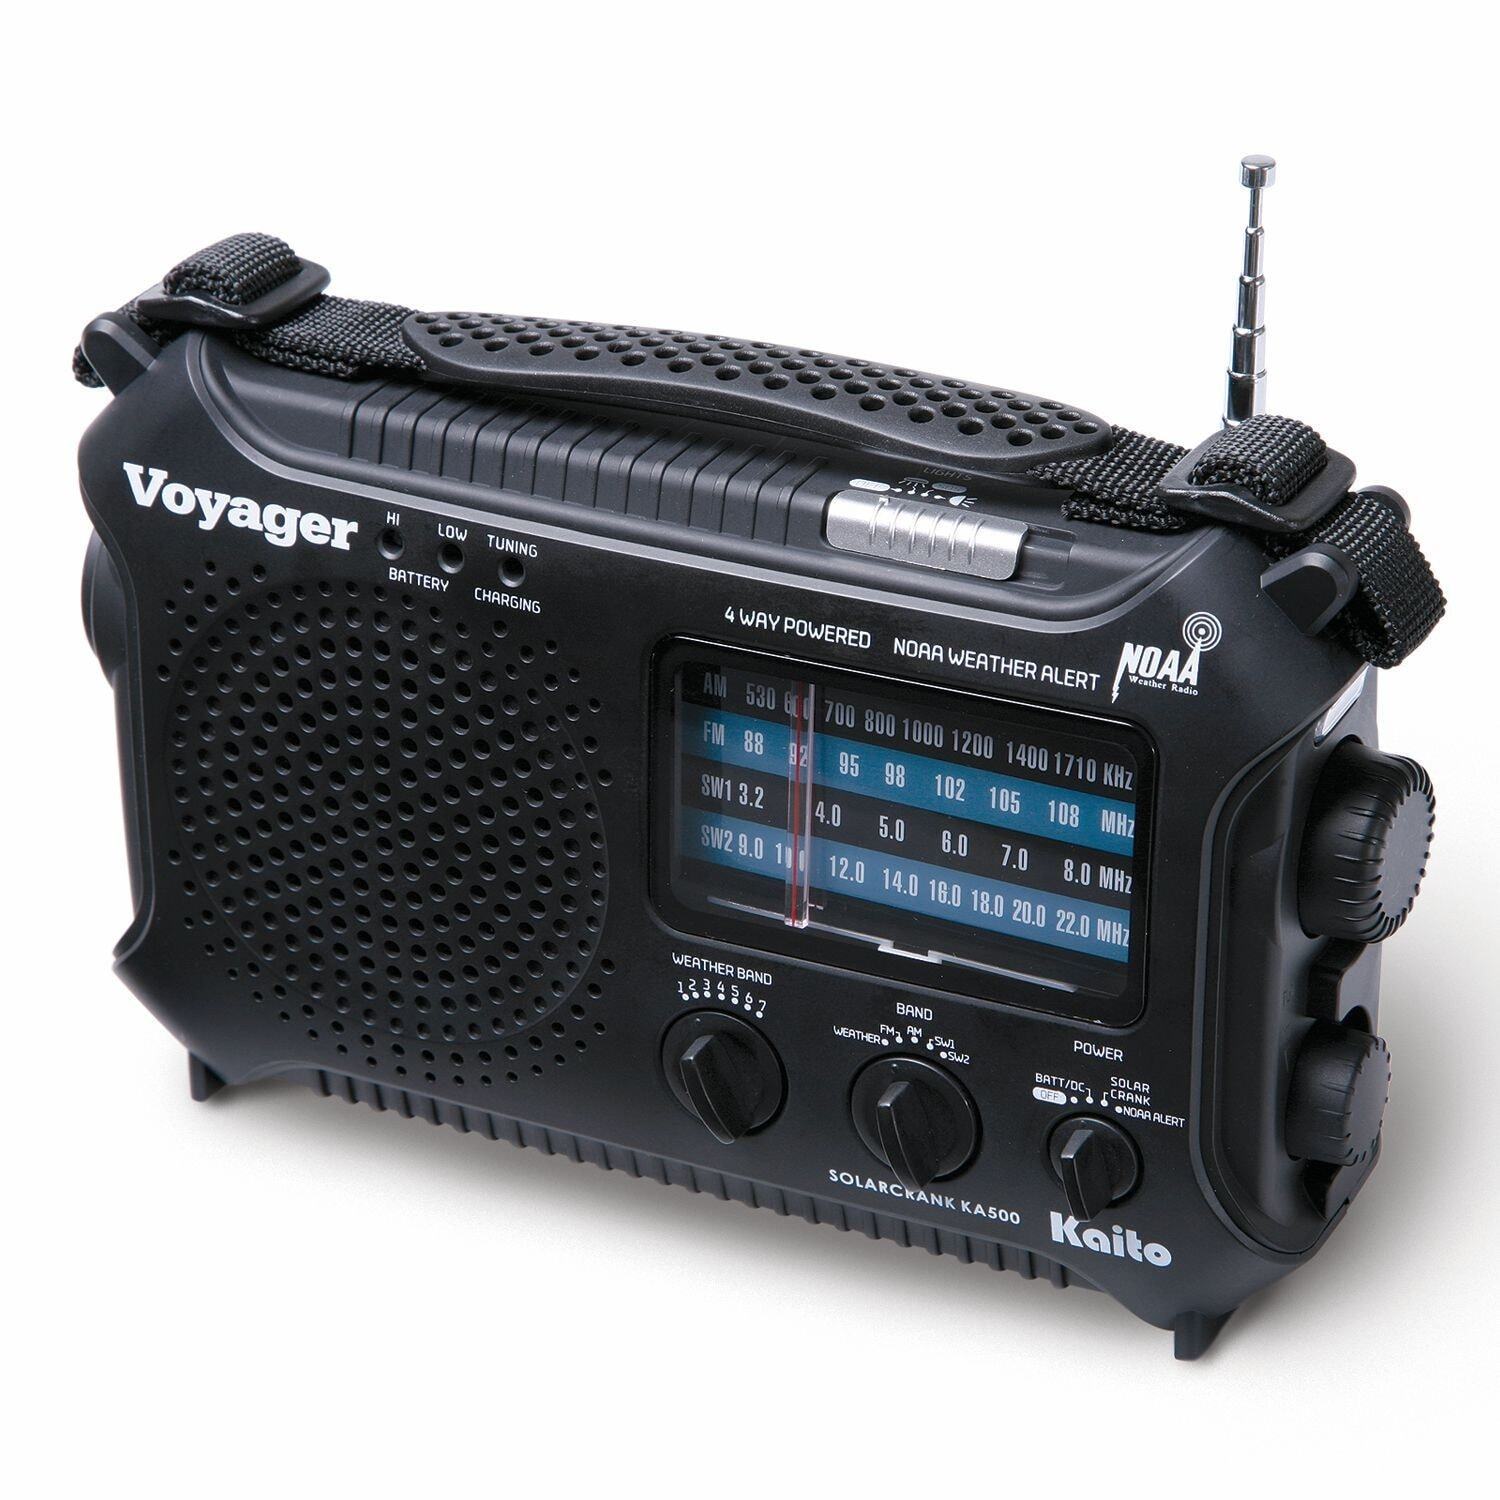 KAITO KA-500 Emergency Radio 4-Way Powered Weather Alert & Phone Charger, Black